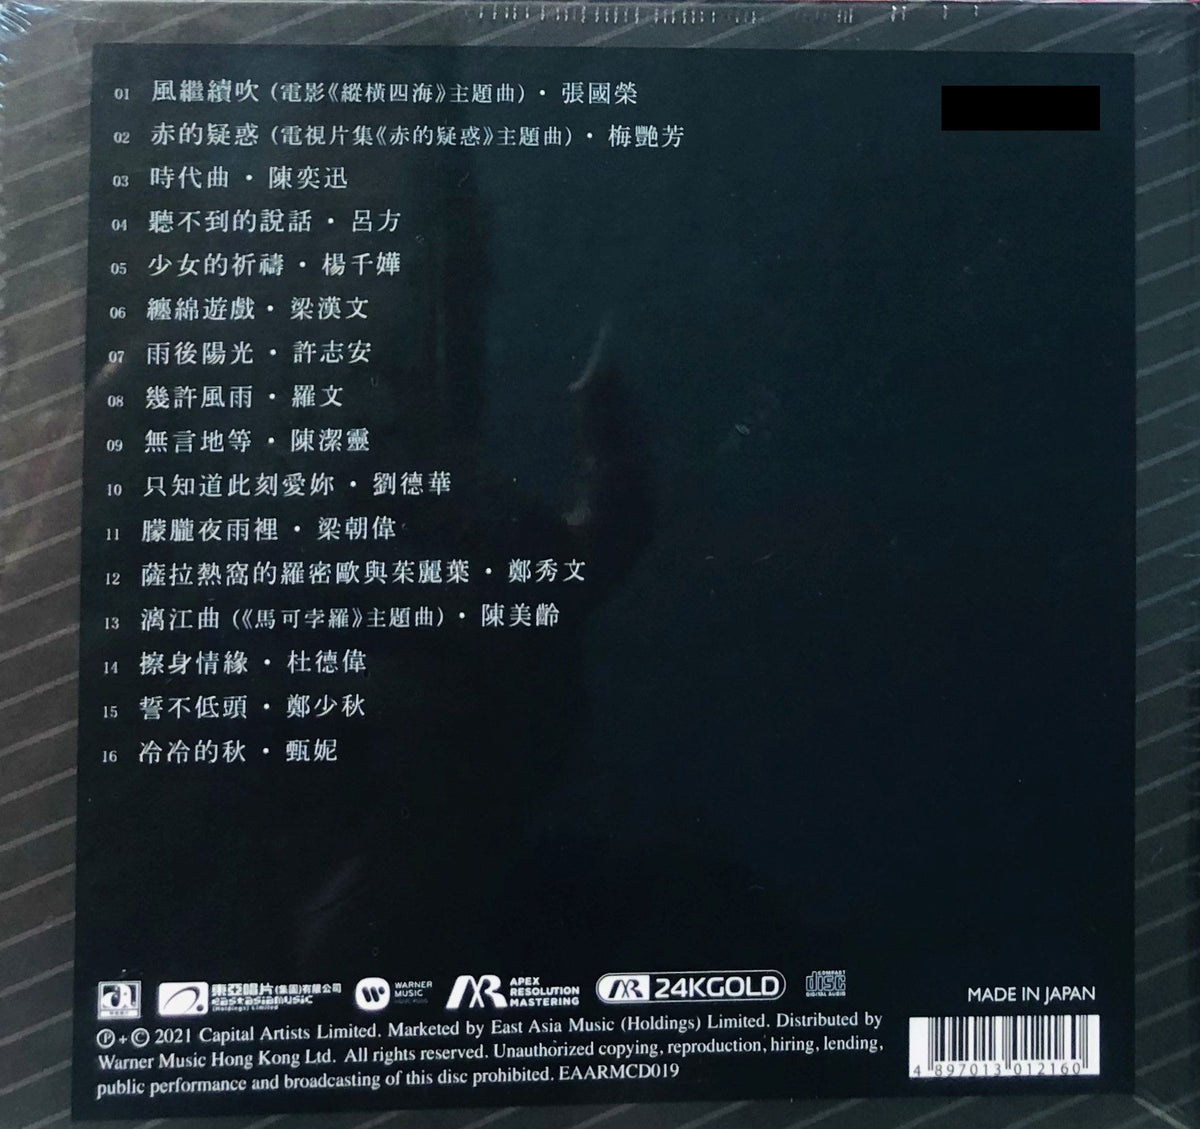 CAPITAL 華星合唱極品珍藏 SAMPLER 24K金碟 (ARM 24K GOLD) CD MADE IN JAPAN – MUSICCDHK